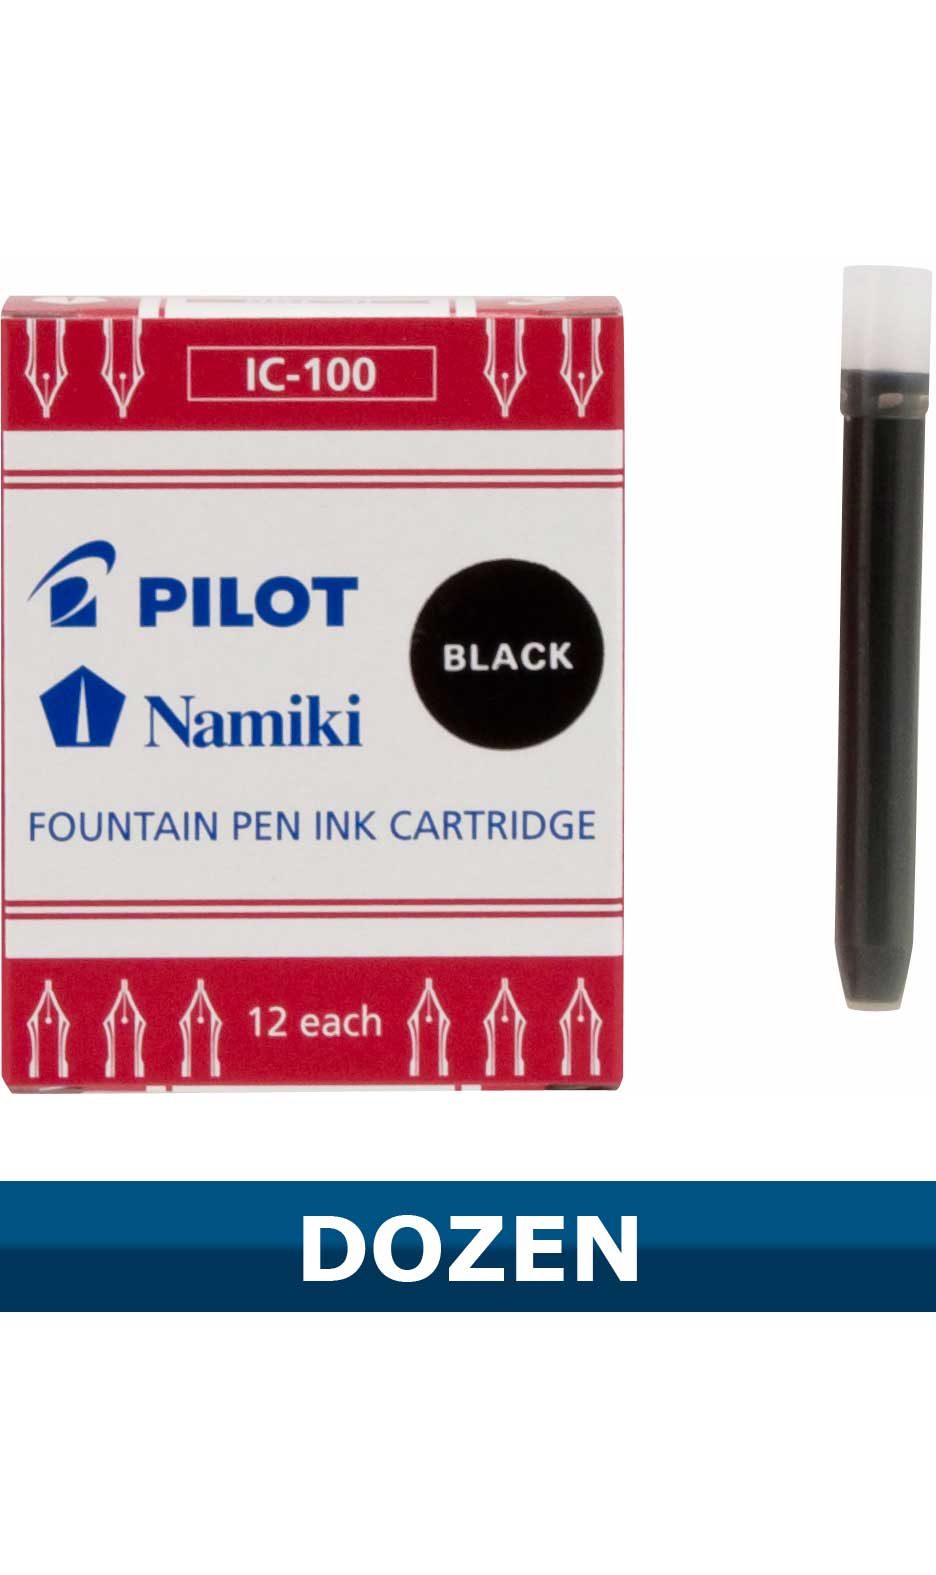 Pilot Namiki IC100 Fountain Pen Ink Cartridges, 12-Pack